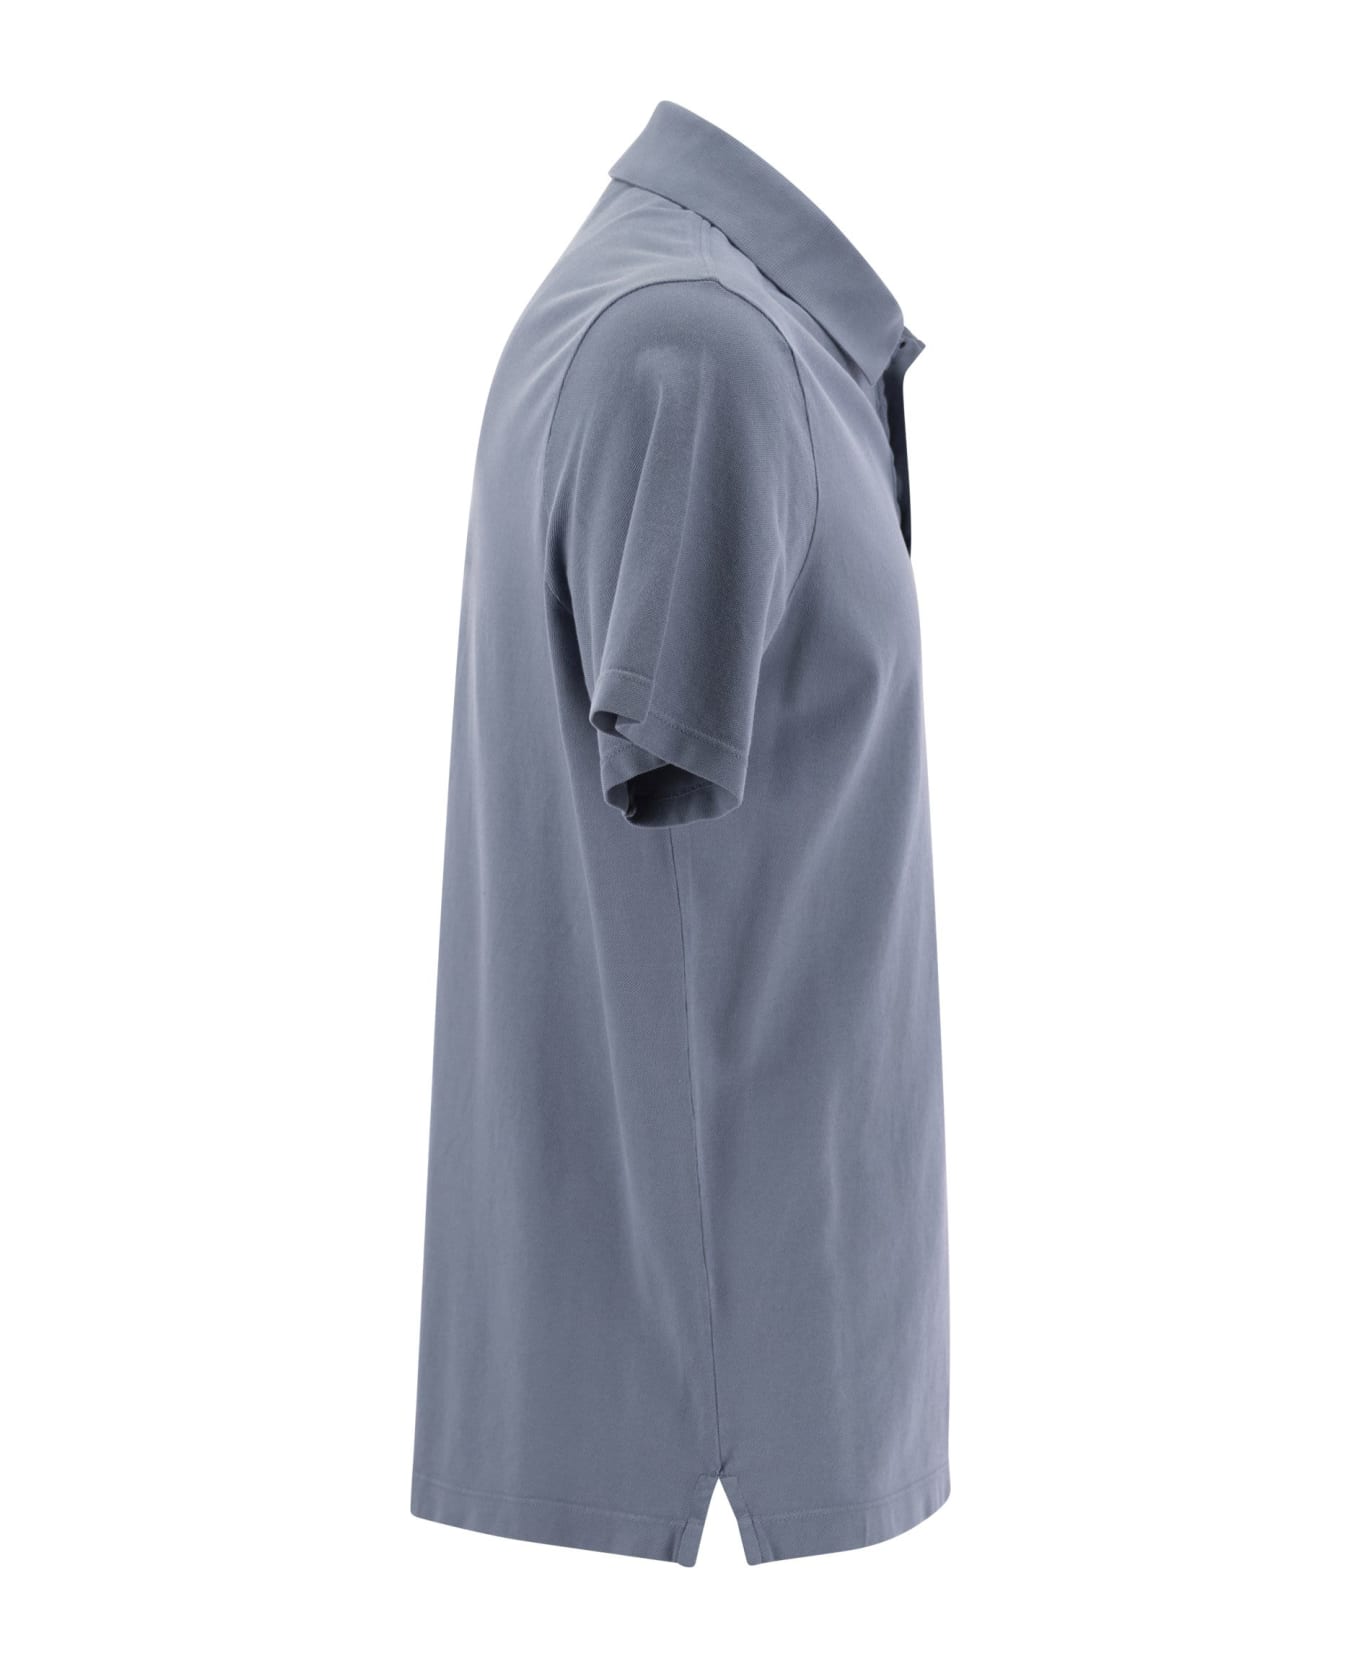 Paul&Shark Garment-dyed Pique Cotton Polo Shirt - Sugar Paper ポロシャツ